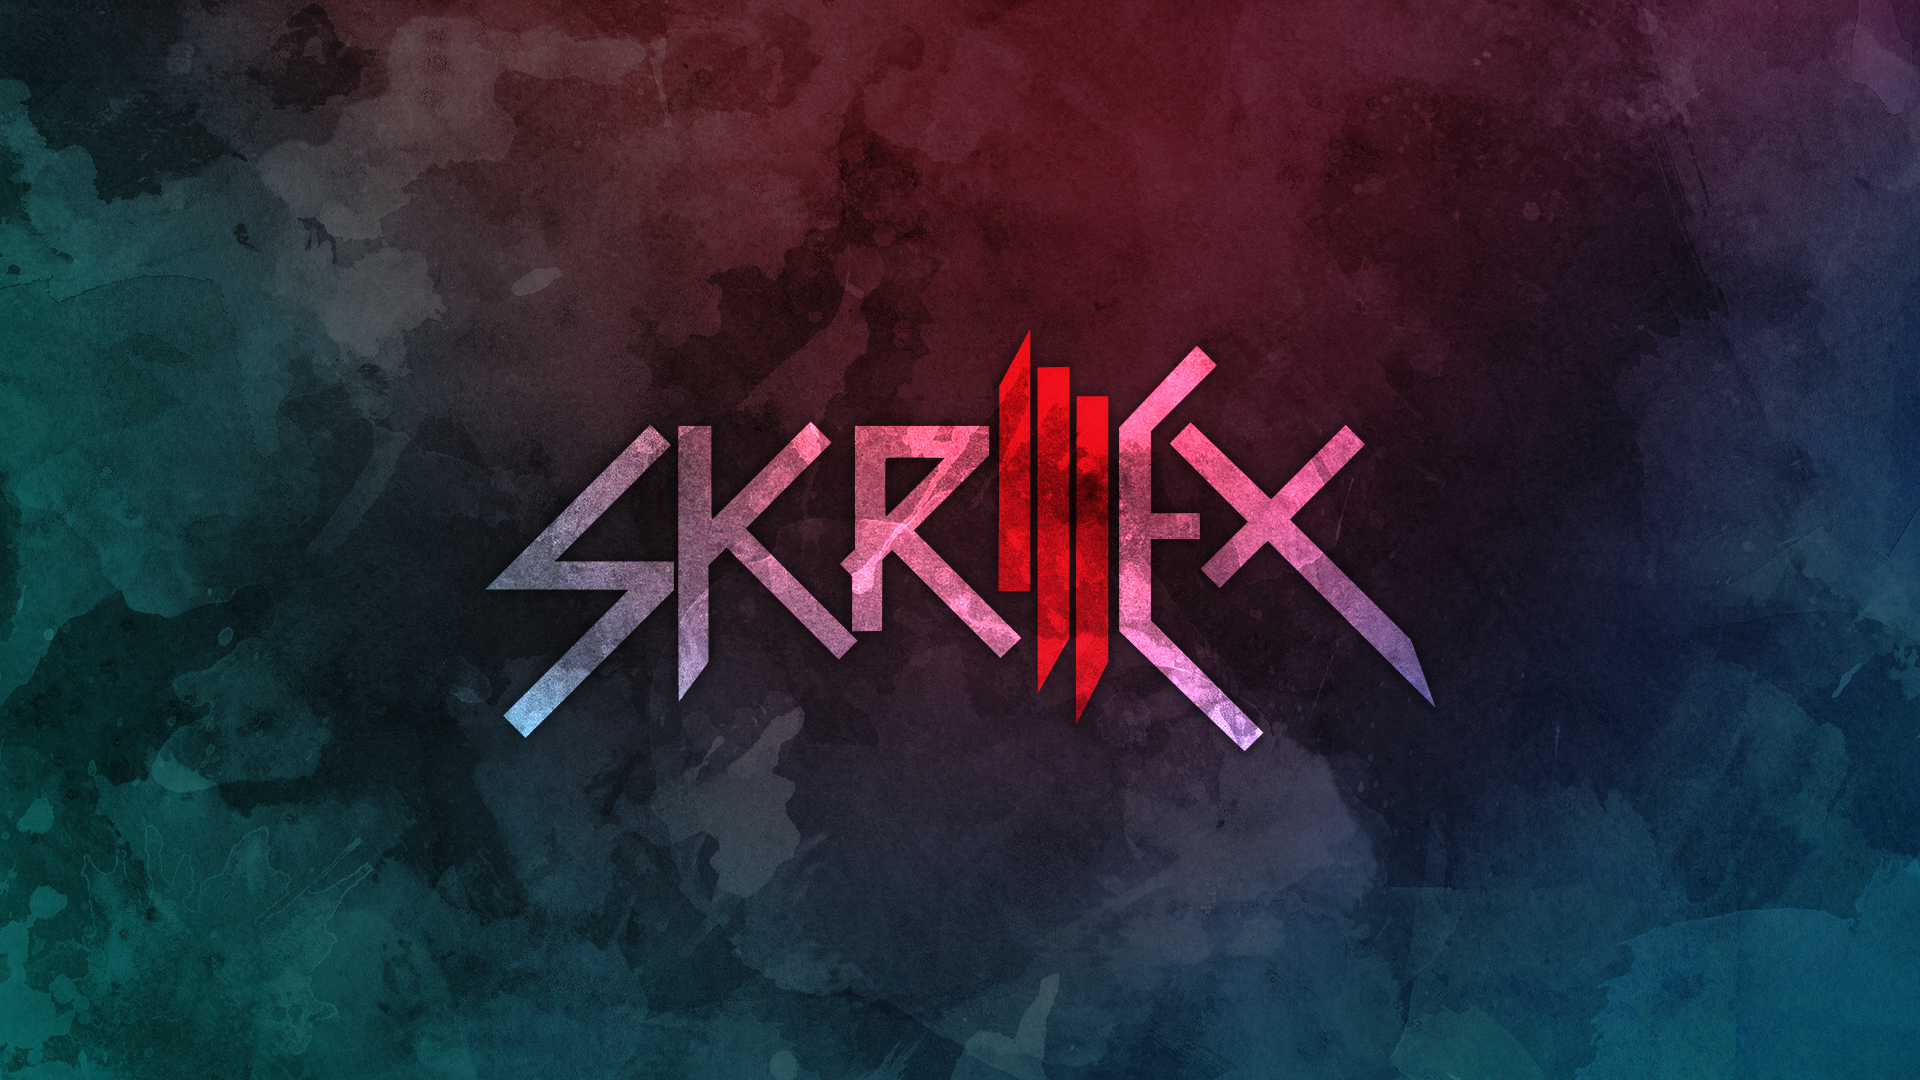 Skrillex logo wallpaper by reason98